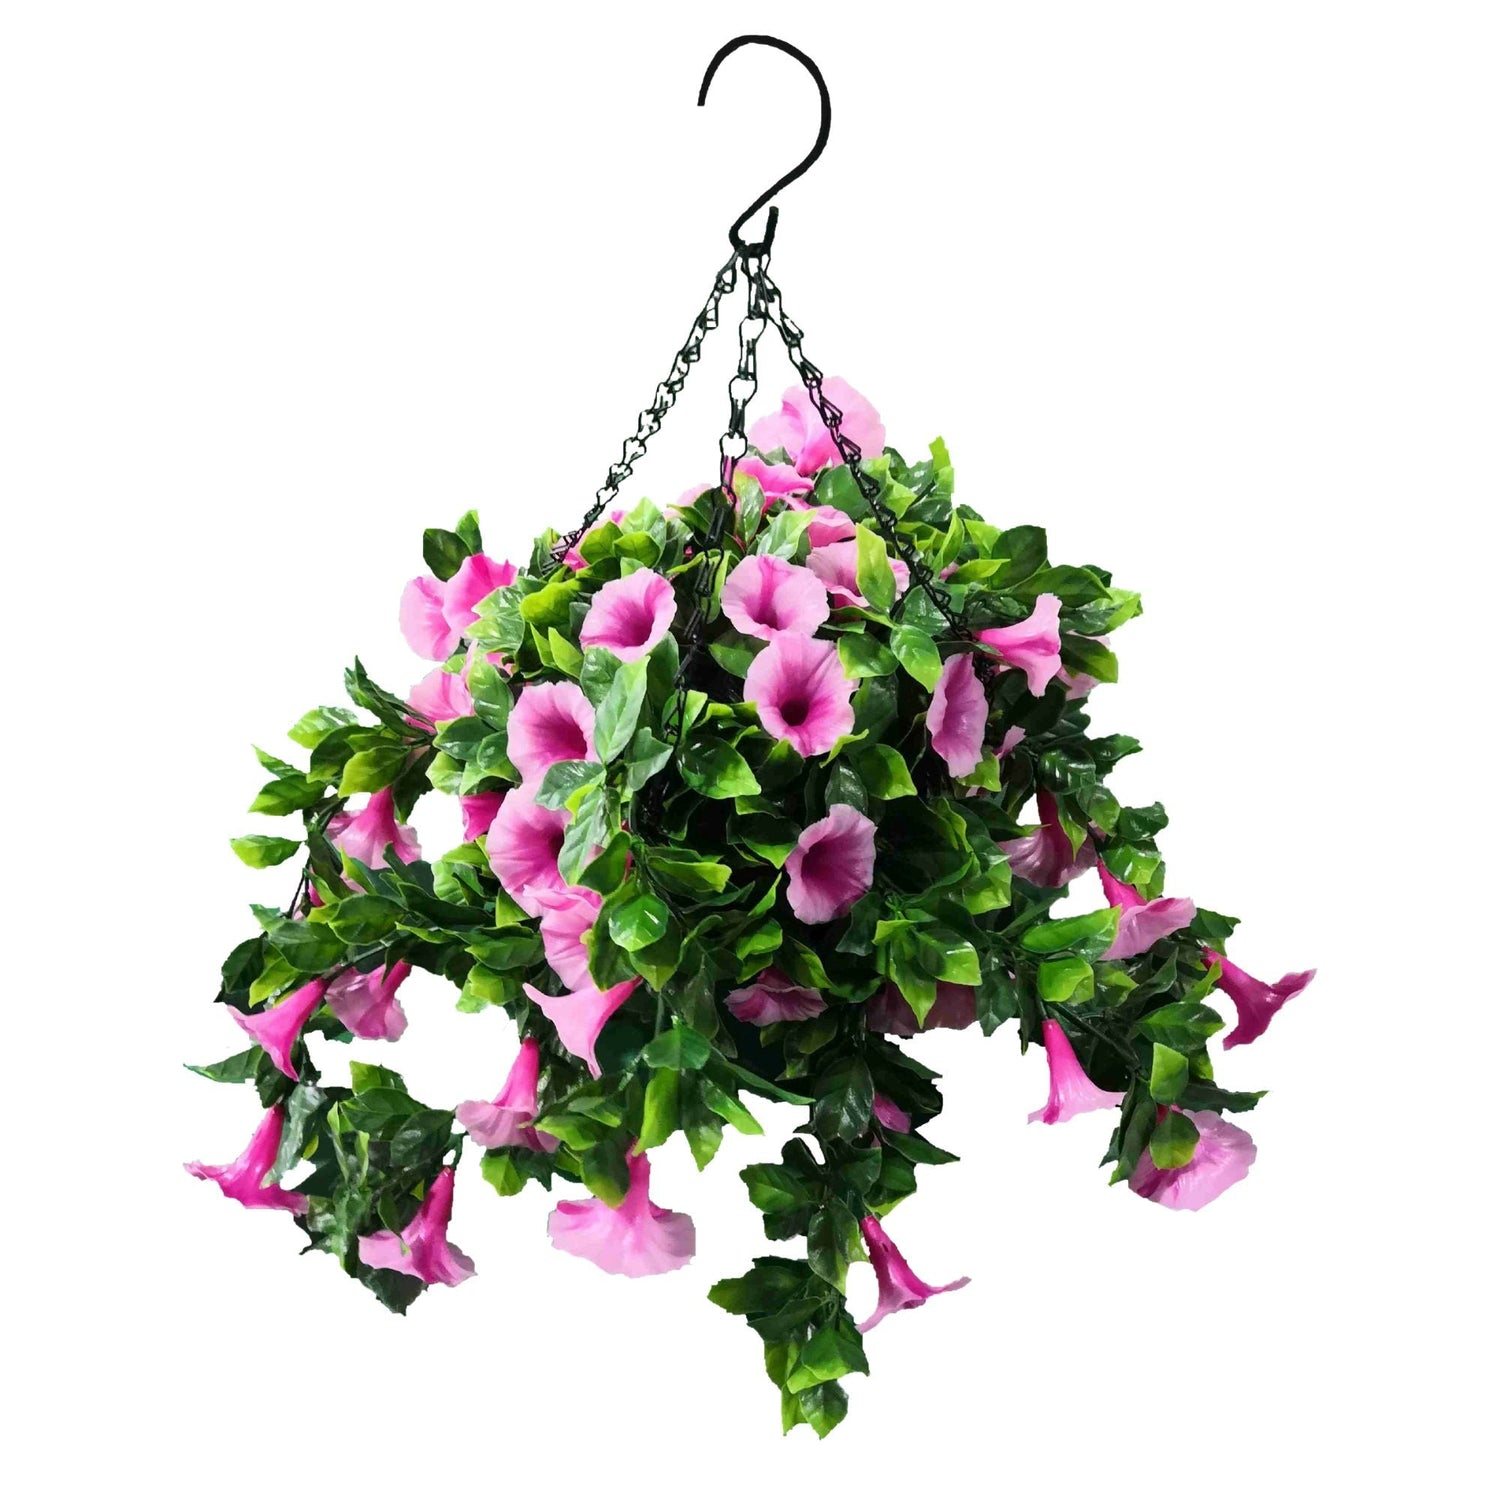 Artificial Petunia Hanging Basket UV Resistant 28cm - Designer Vertical Gardens artificial hanging ferns Flowering plants